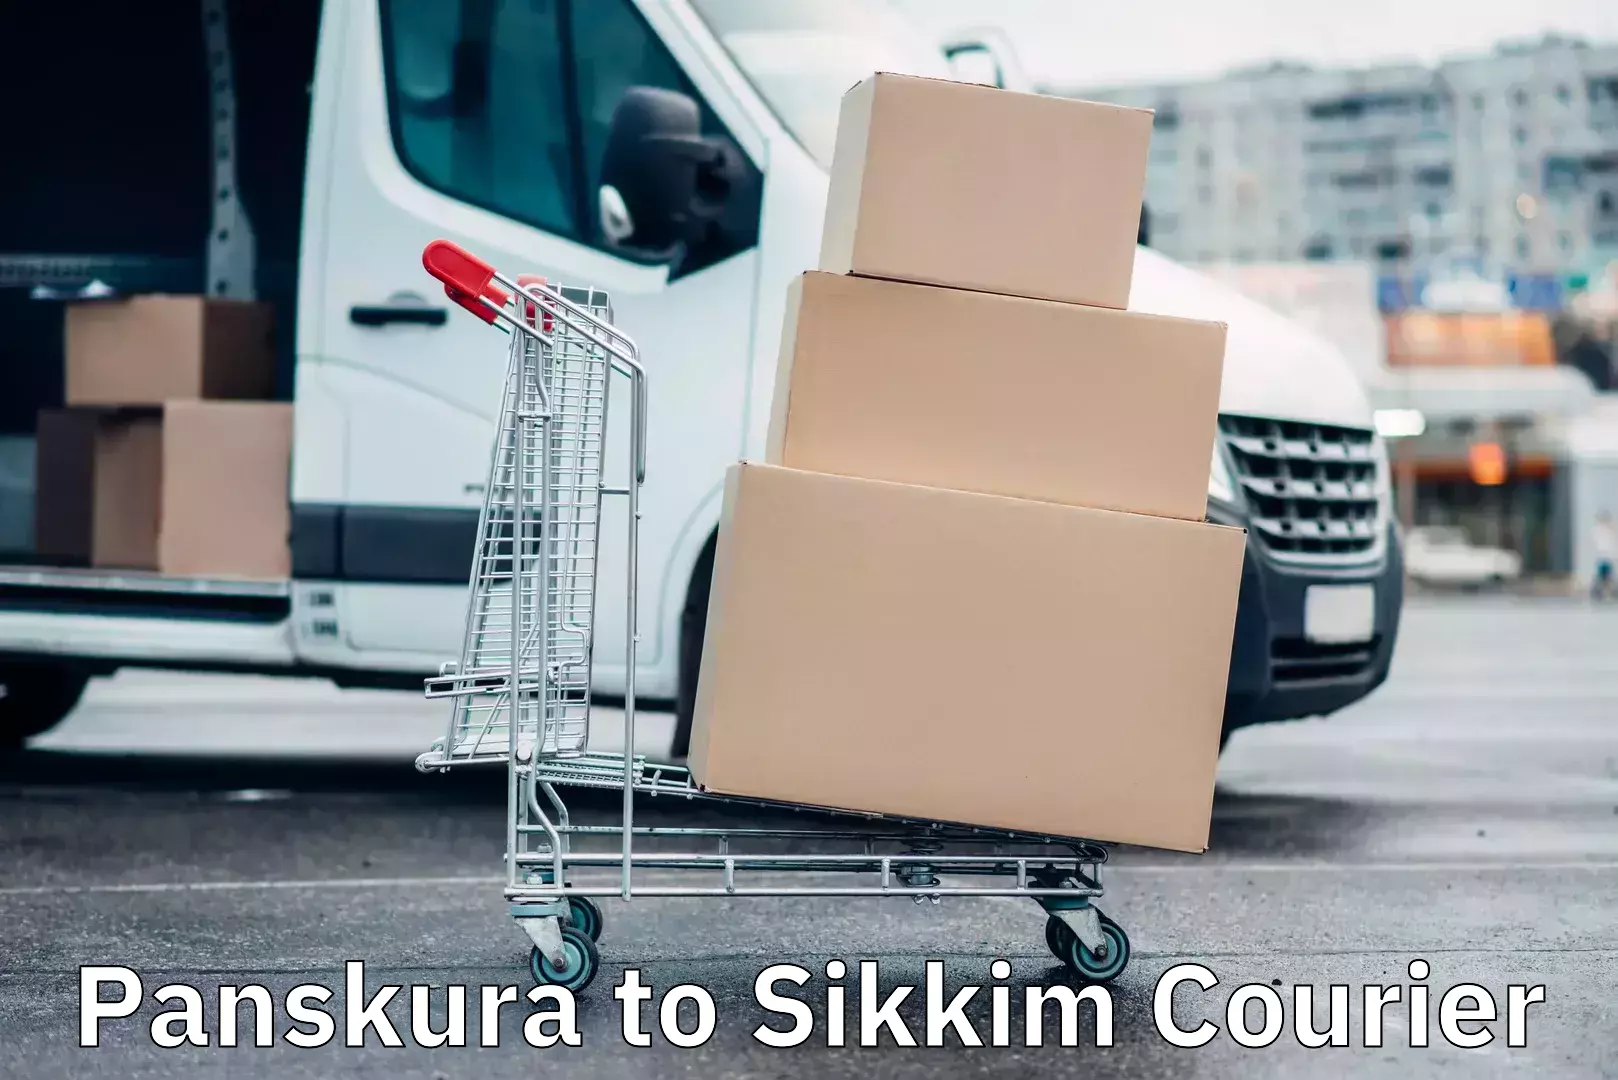 Efficient order fulfillment Panskura to Sikkim